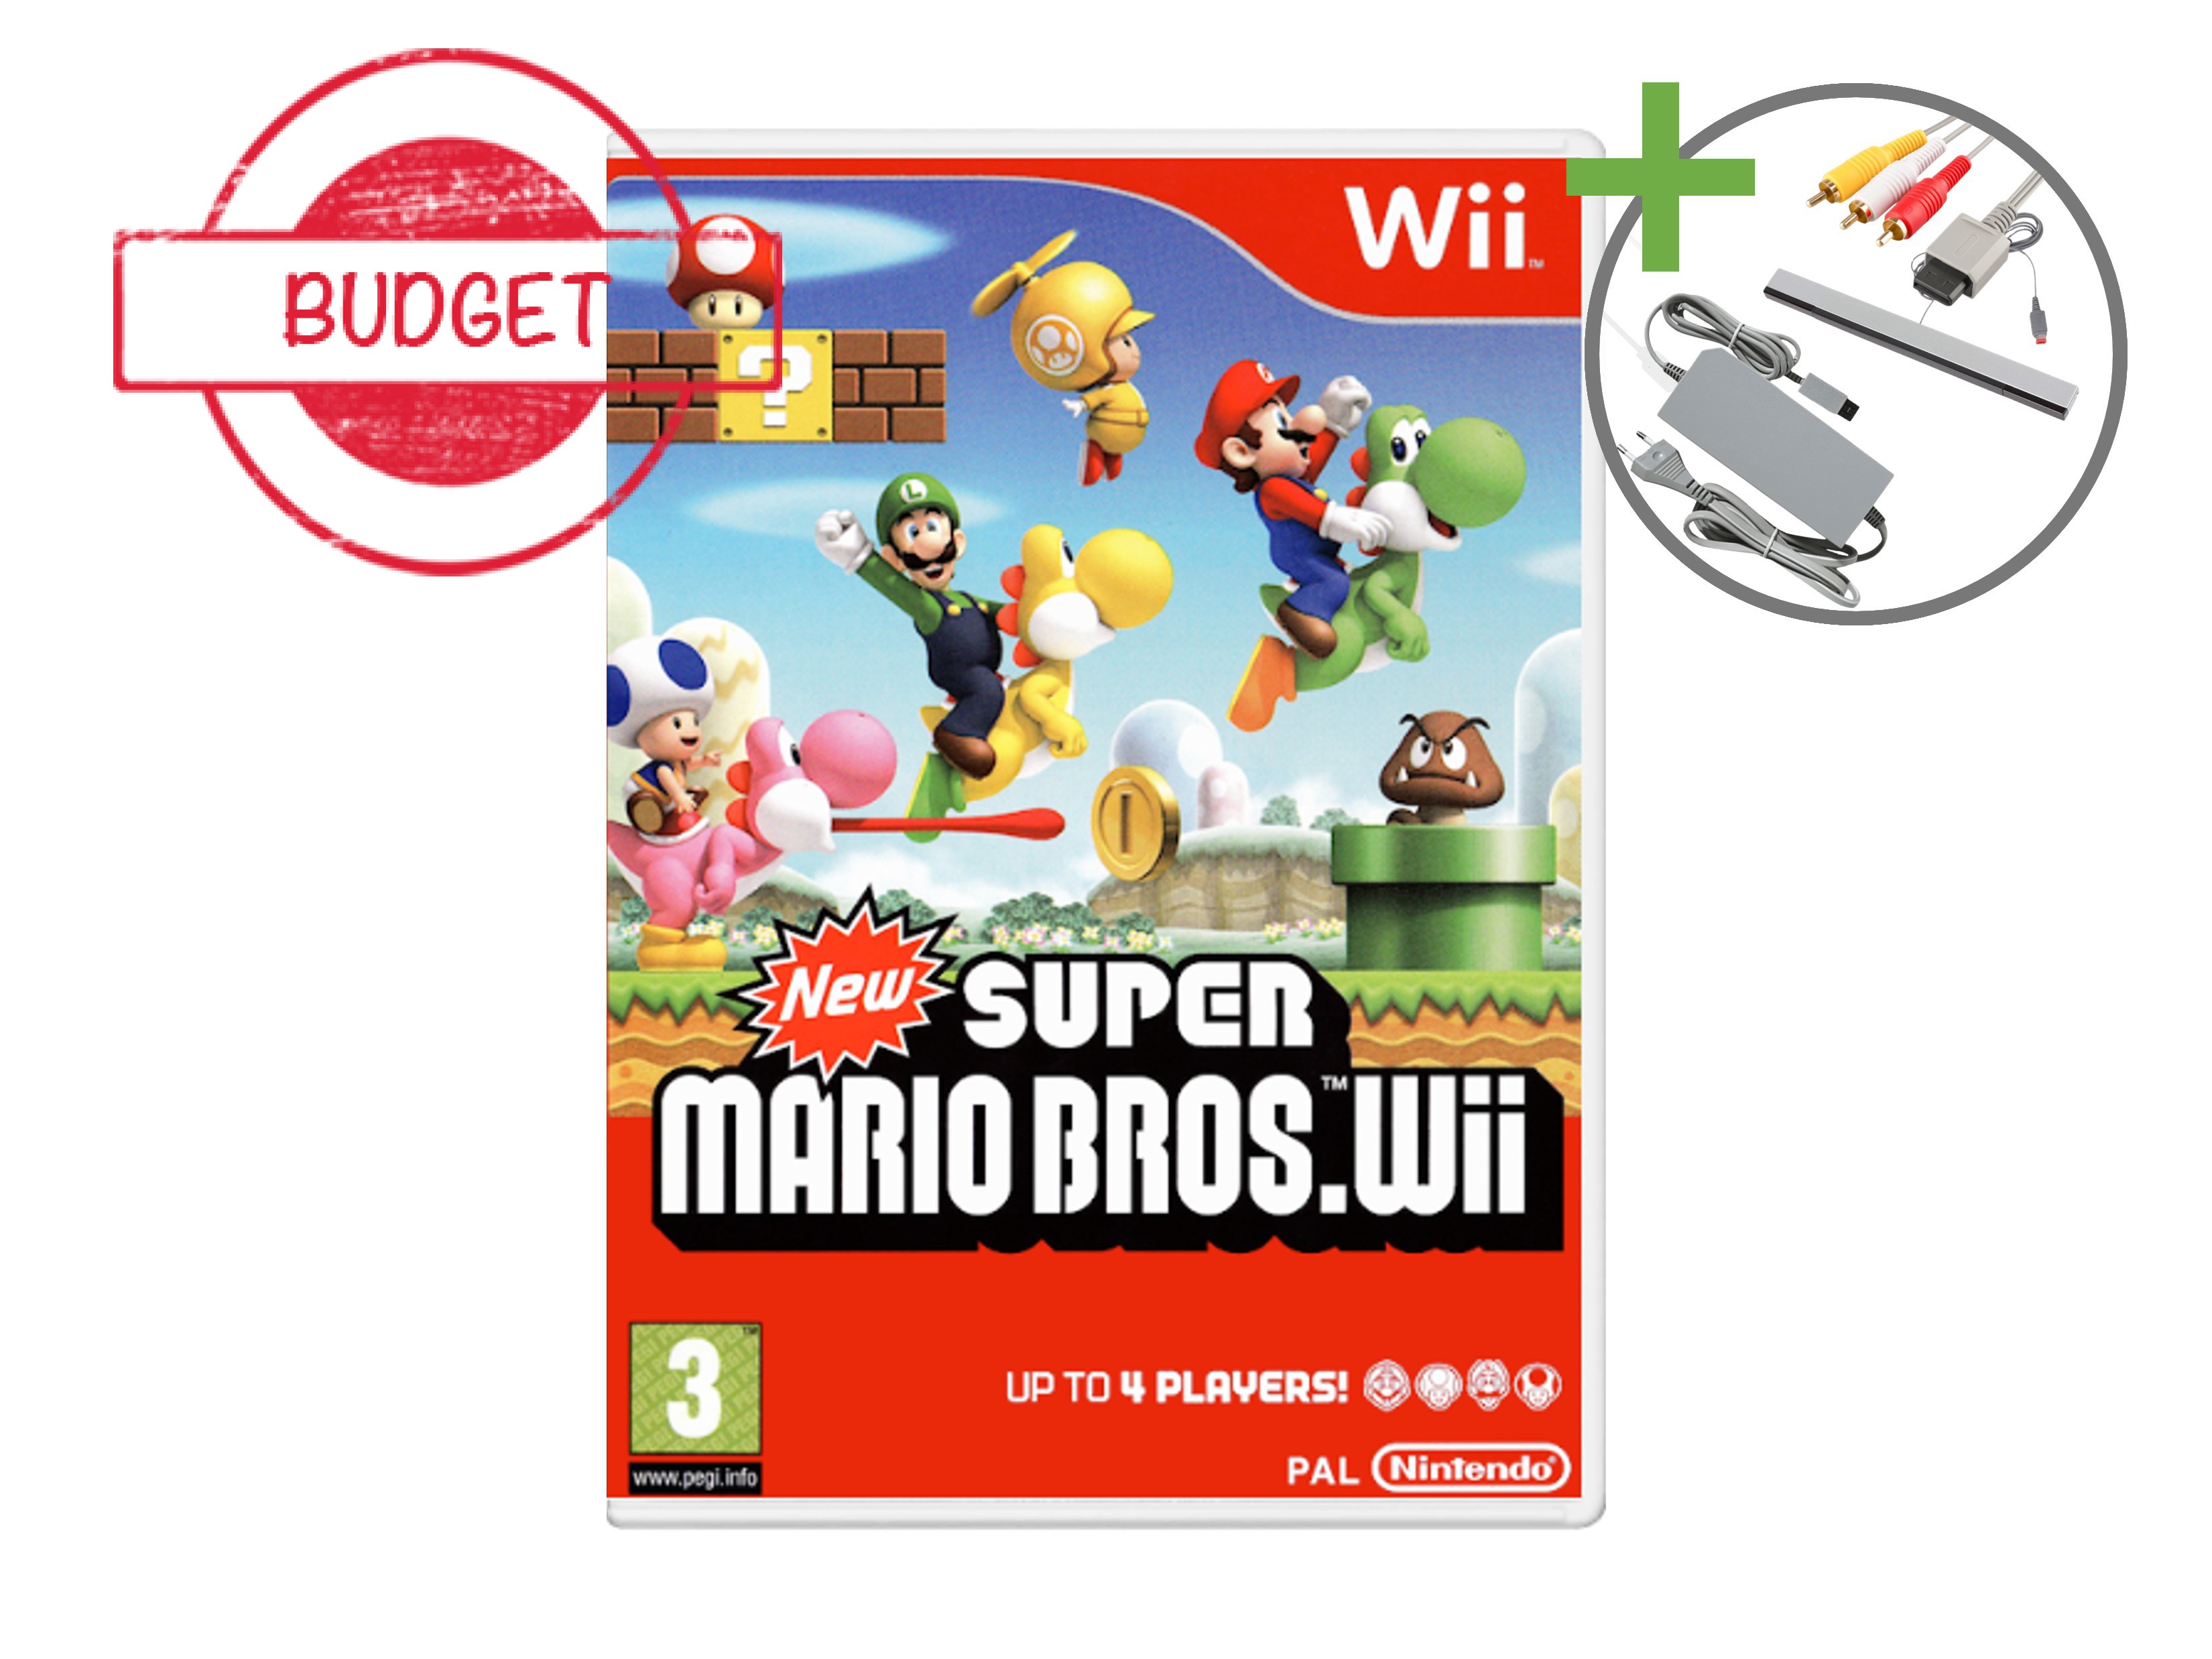 Nintendo Wii Mini Starter Pack - New Super Mario Bros. Wii Edition - Budget - Wii Hardware - 4